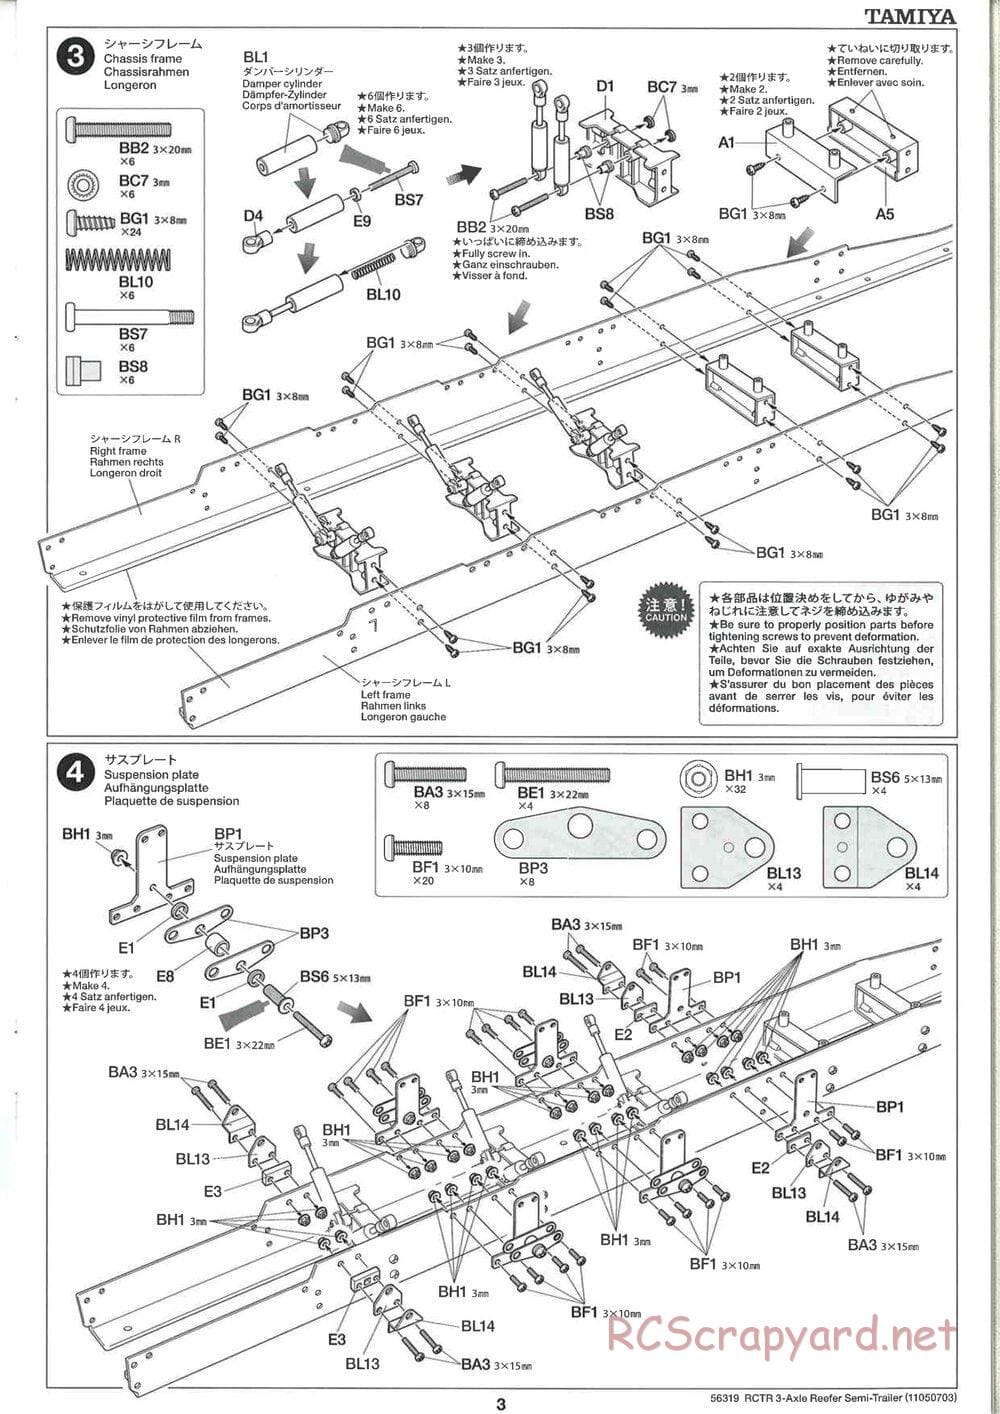 Tamiya - Semi Reefer Trailer Chassis - Manual - Page 3